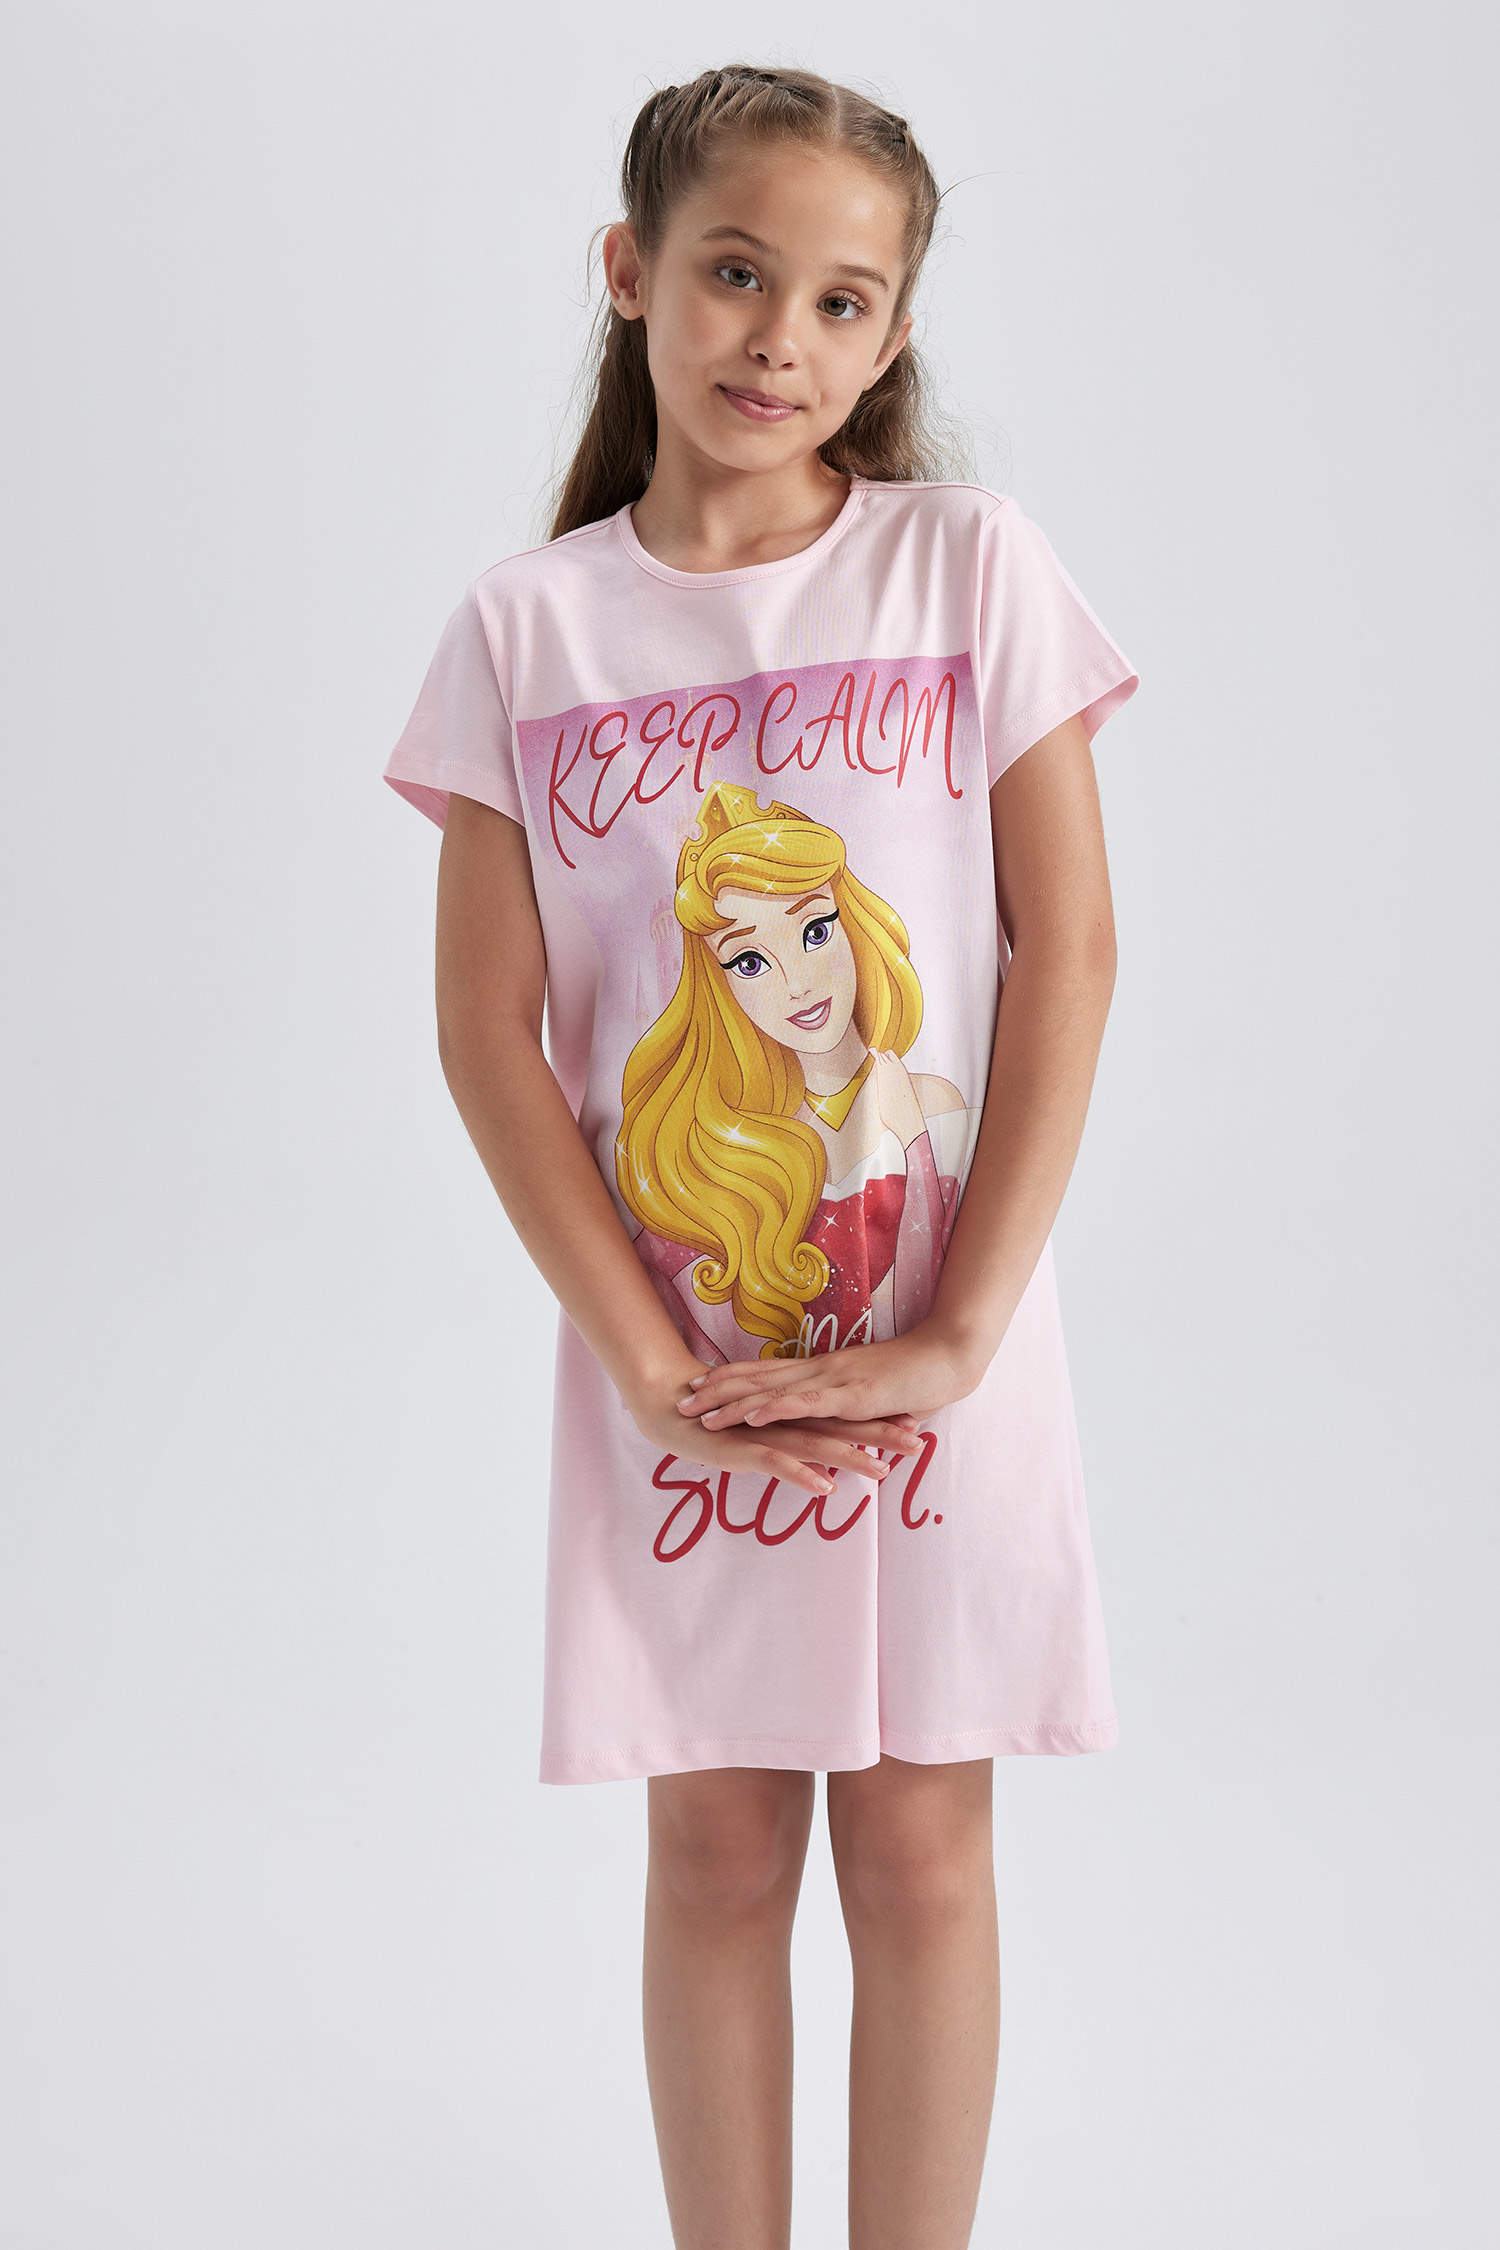 BLOMDES Princess Nightgown for Little Girls Cotton Sleep Dress